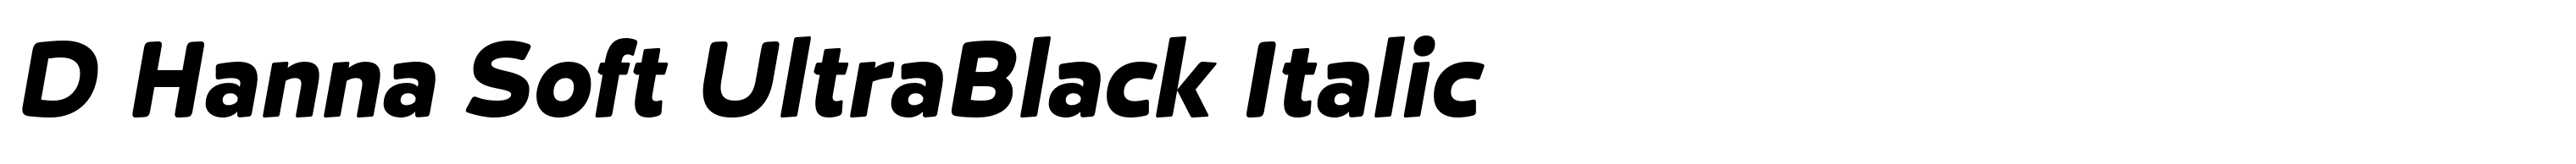 D Hanna Soft UltraBlack Italic